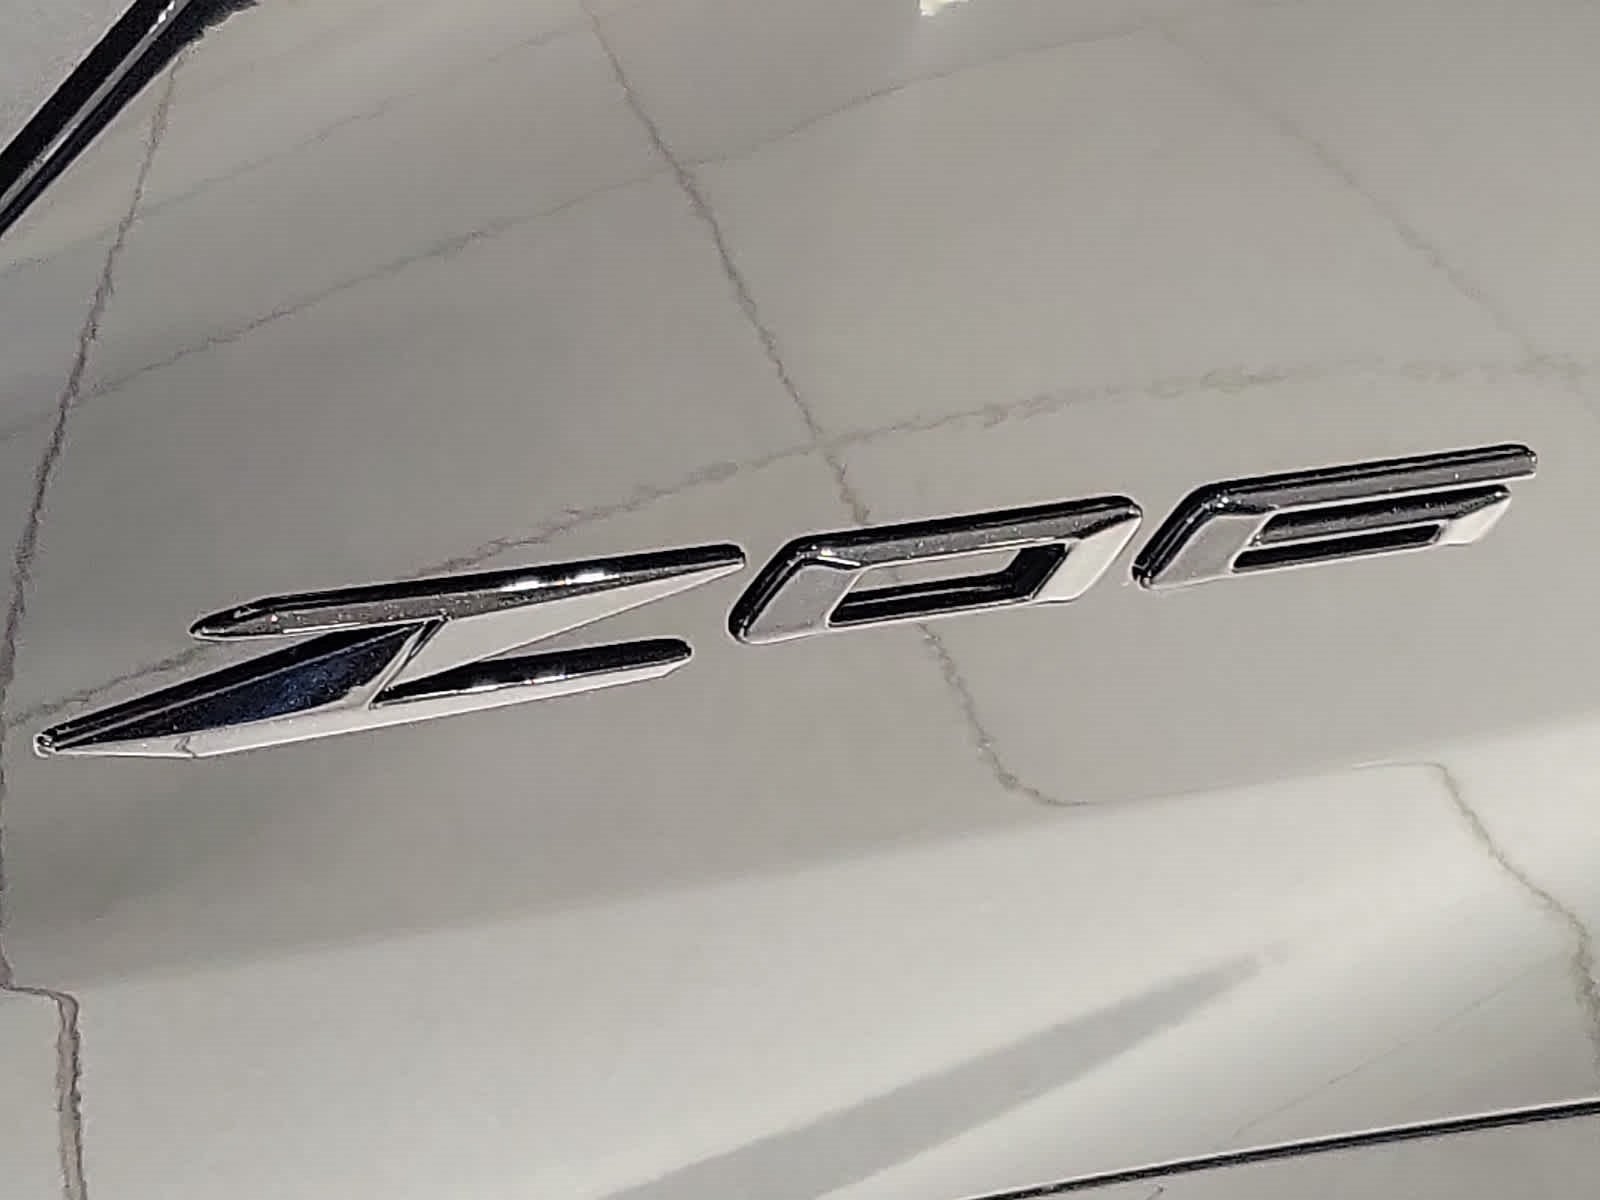 2023 Chevrolet Corvette Z06 3LZ